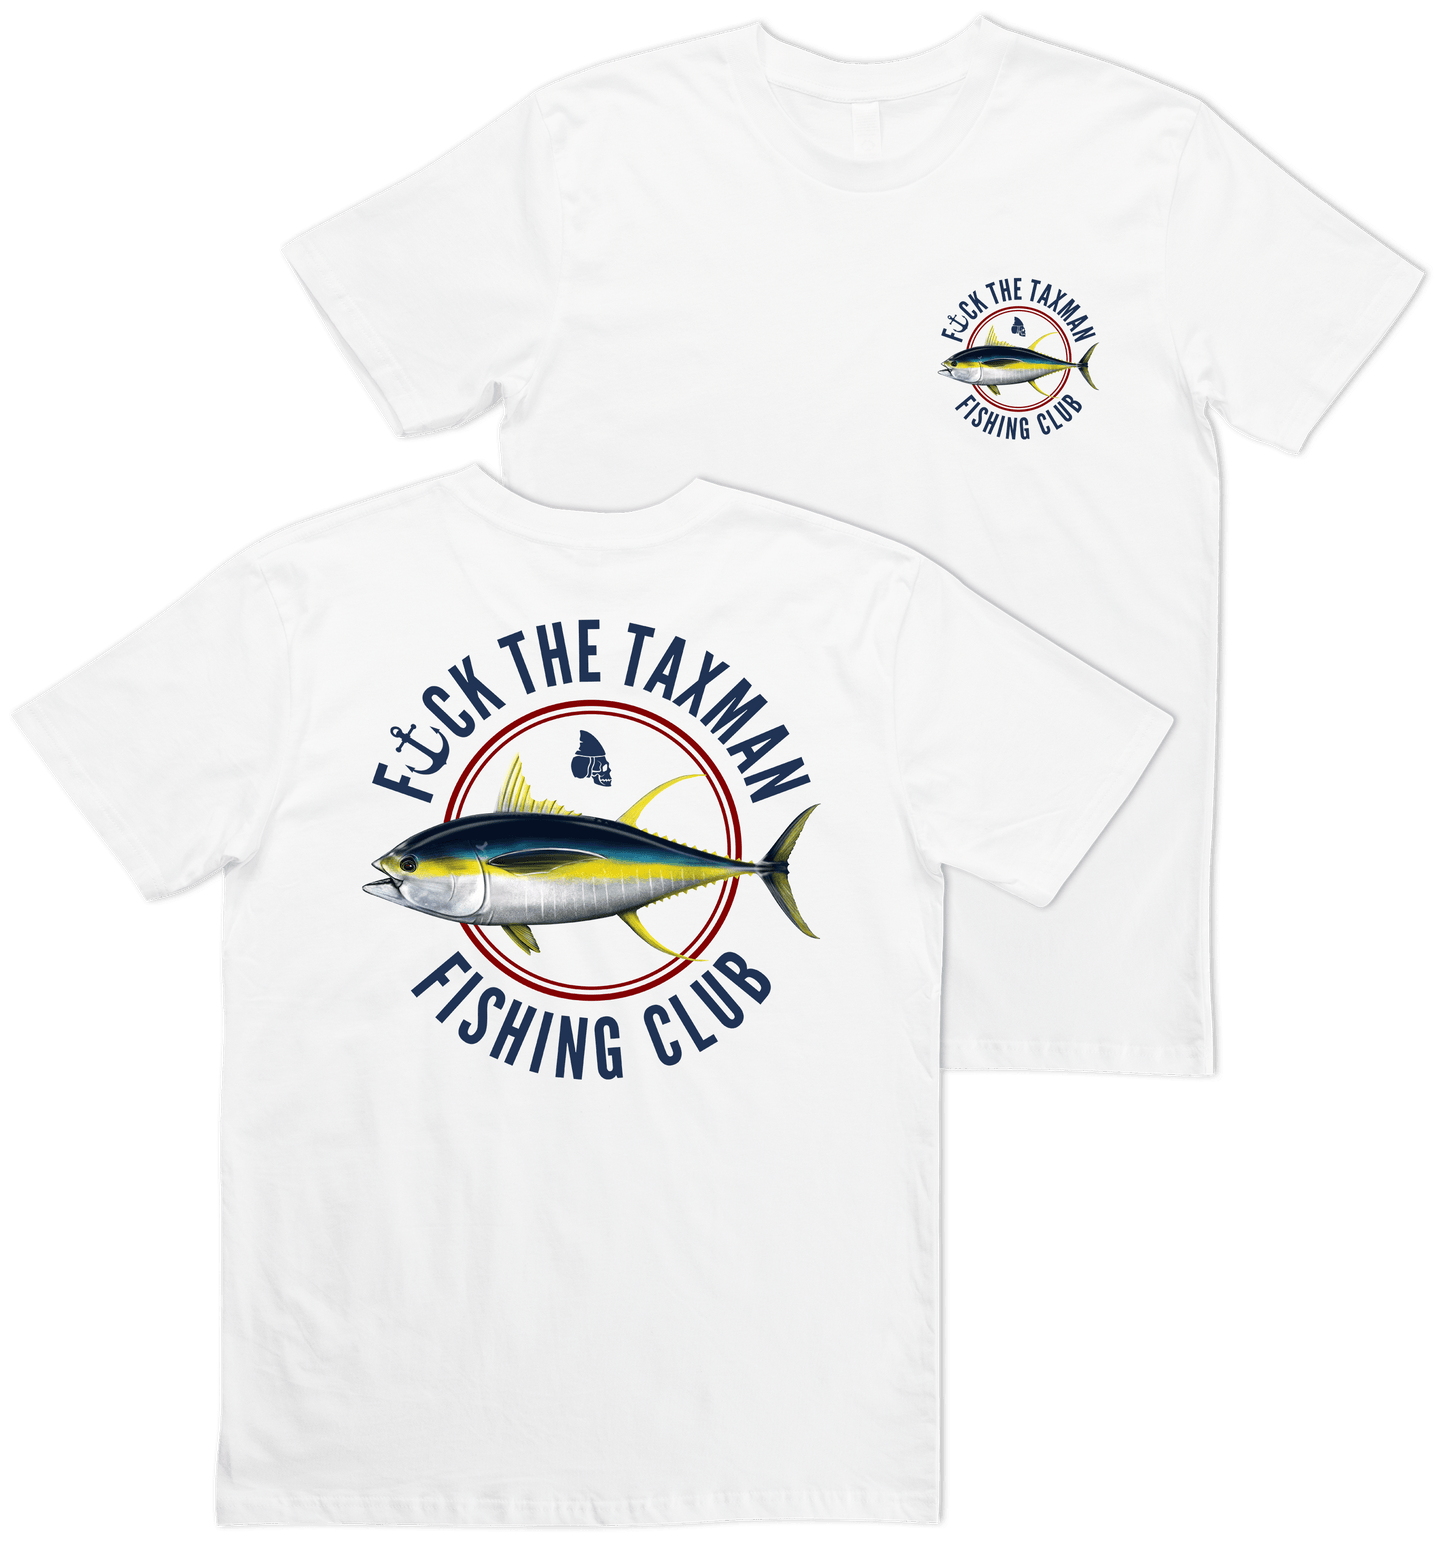 White Tuna T-Shirt. Fishing Club Shirt